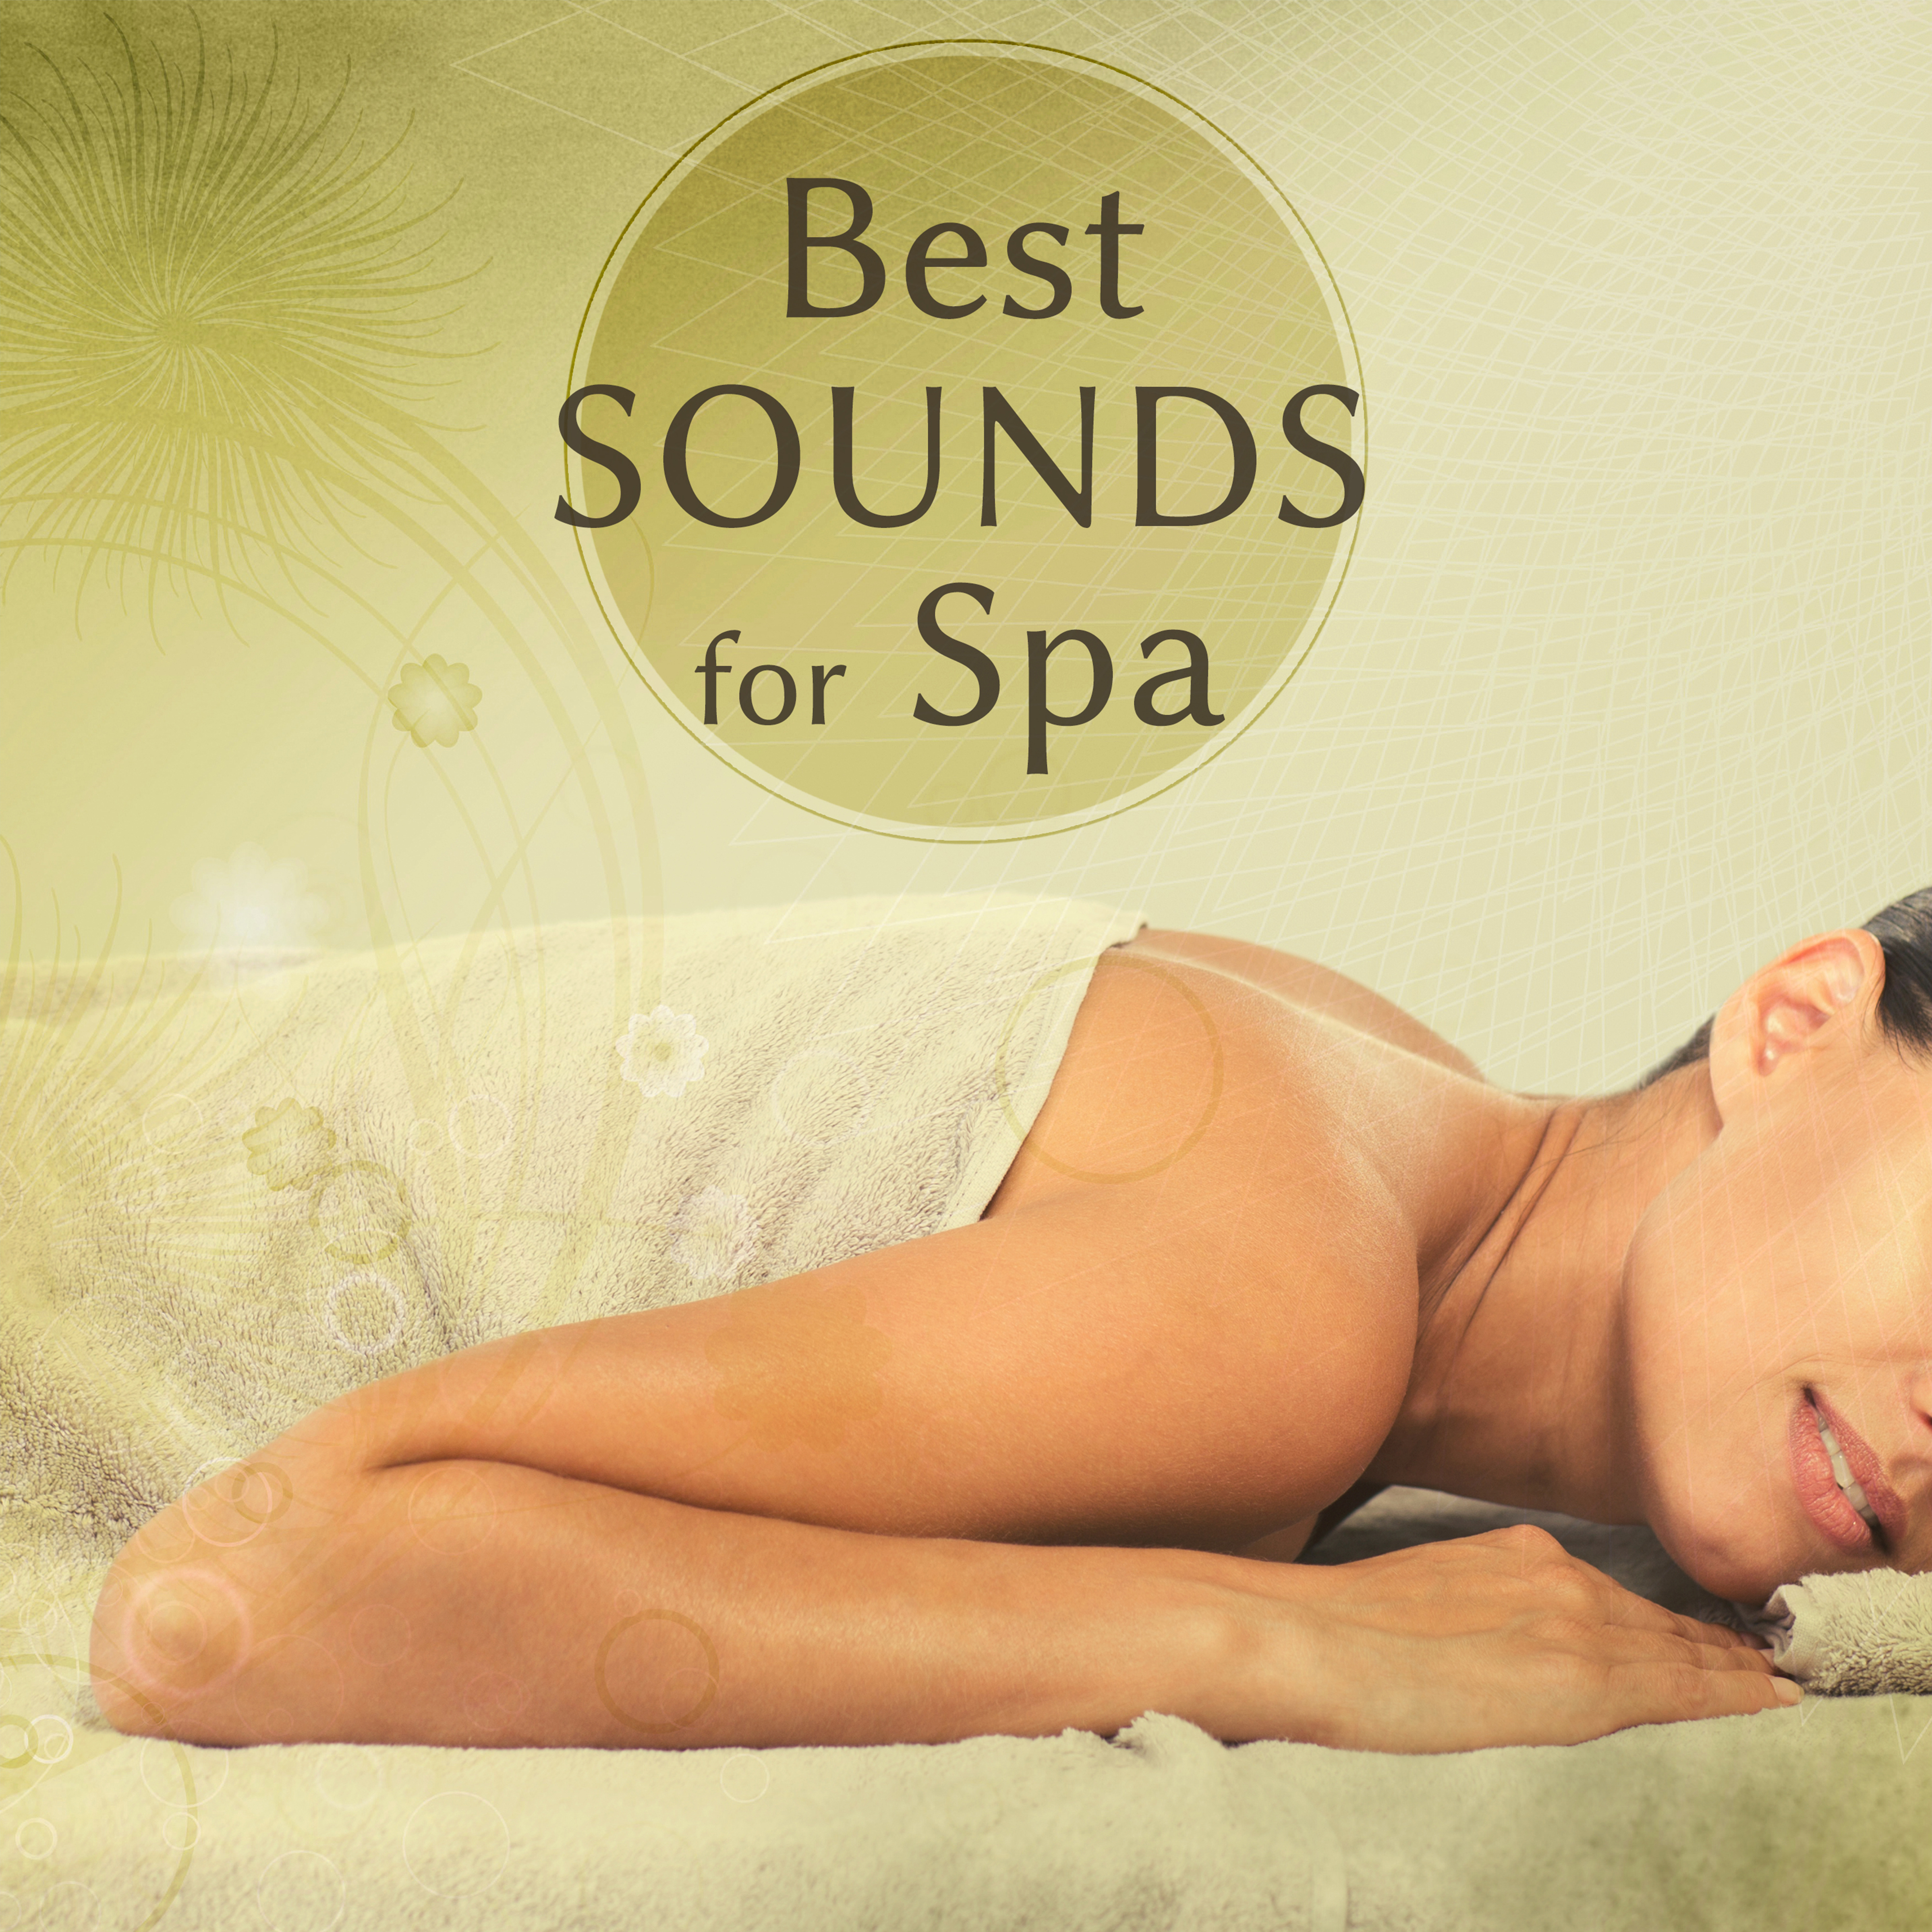 Best Sounds for Spa  Nature Sounds for Wellness, Sensual Massage, Healing Melodies, Ocean Waves, Calming Birds